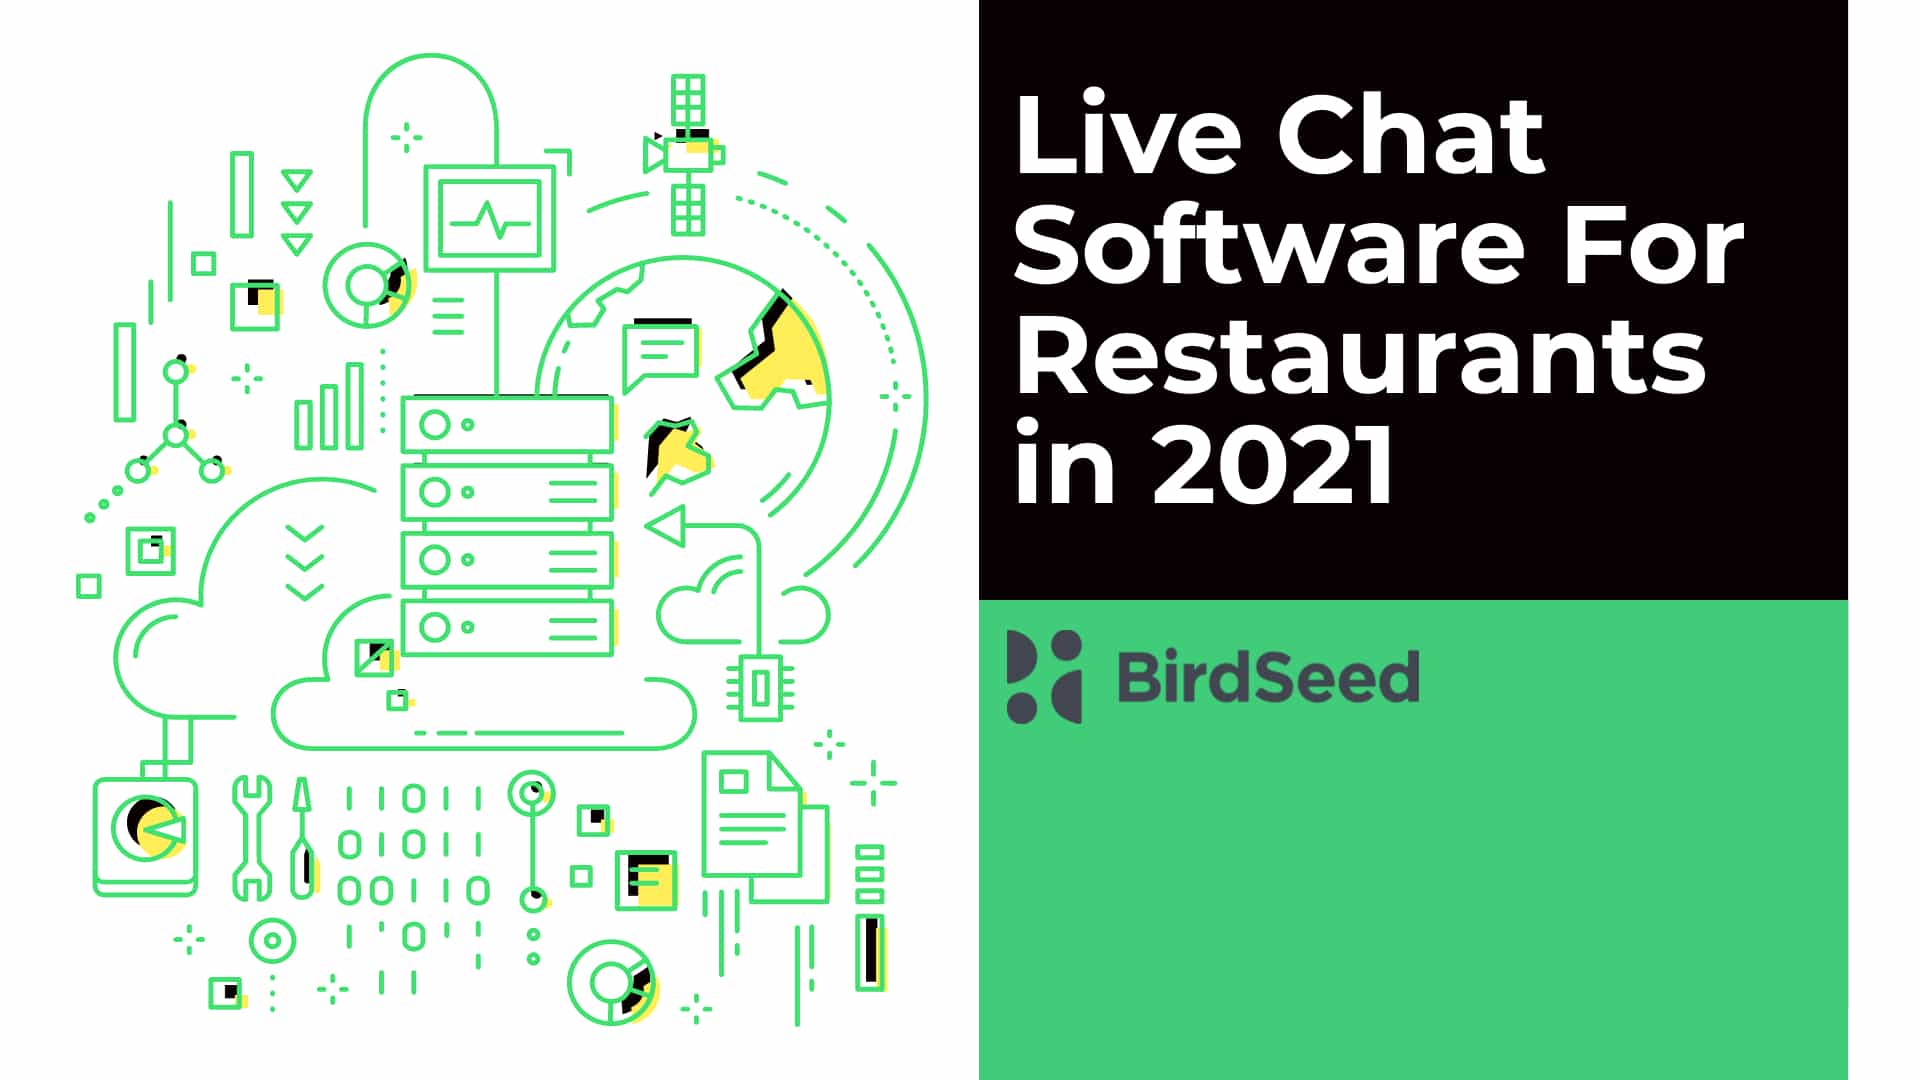 Live Chat Software For Restaurants